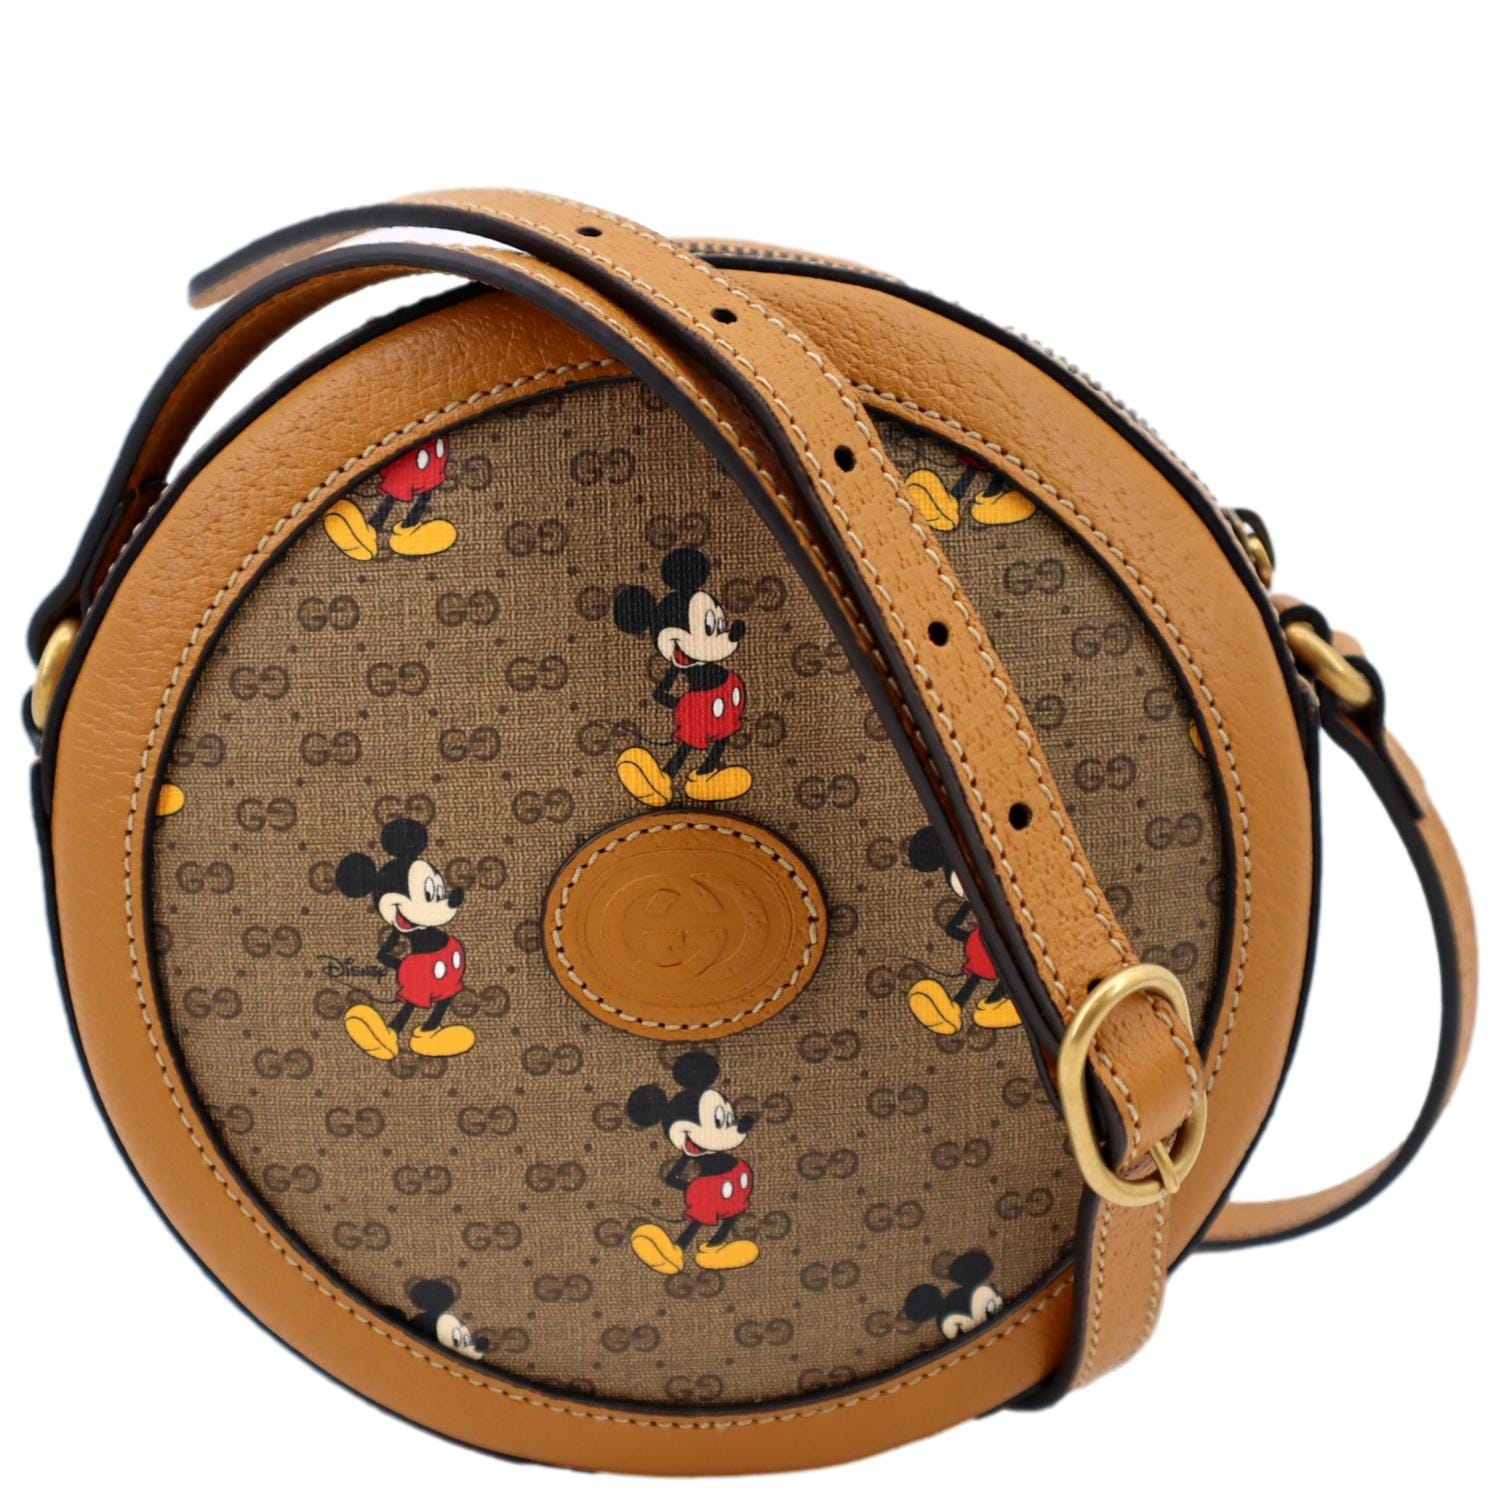 Gucci x Disney Round Supreme Canvas Shoulder Bag